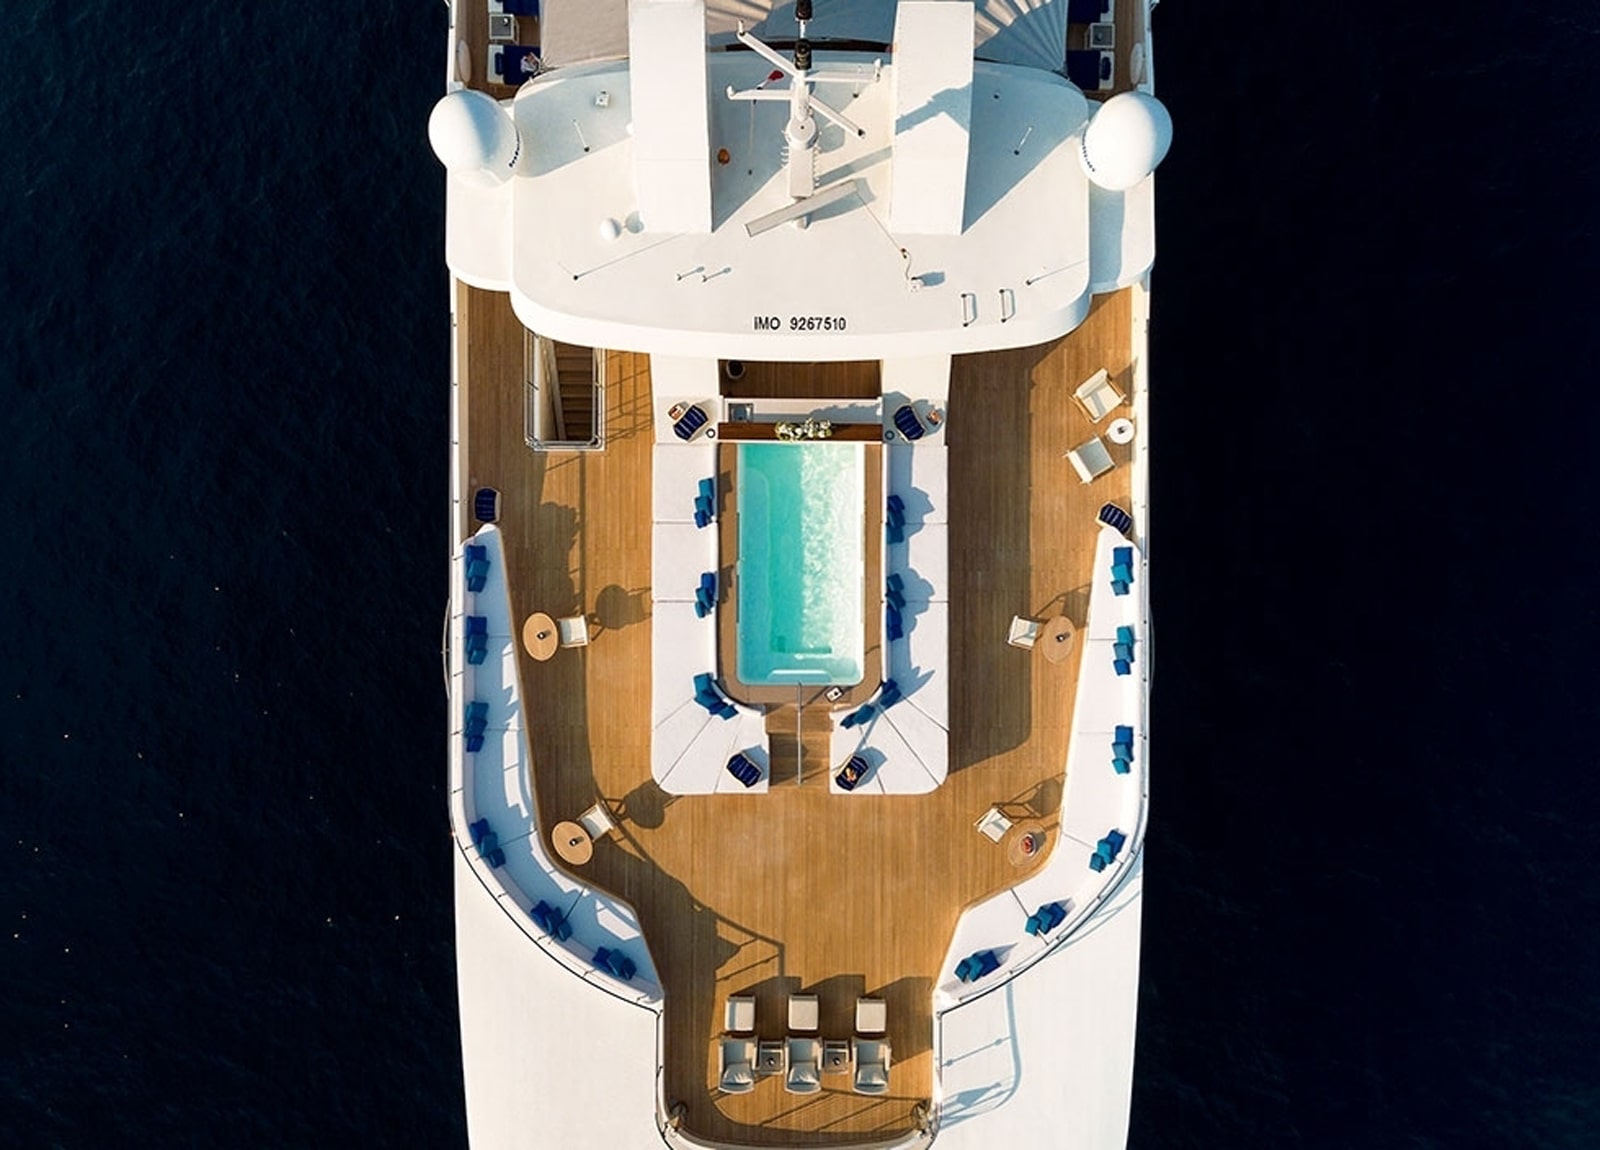 upperdeck pool luxury yacht serenity 72